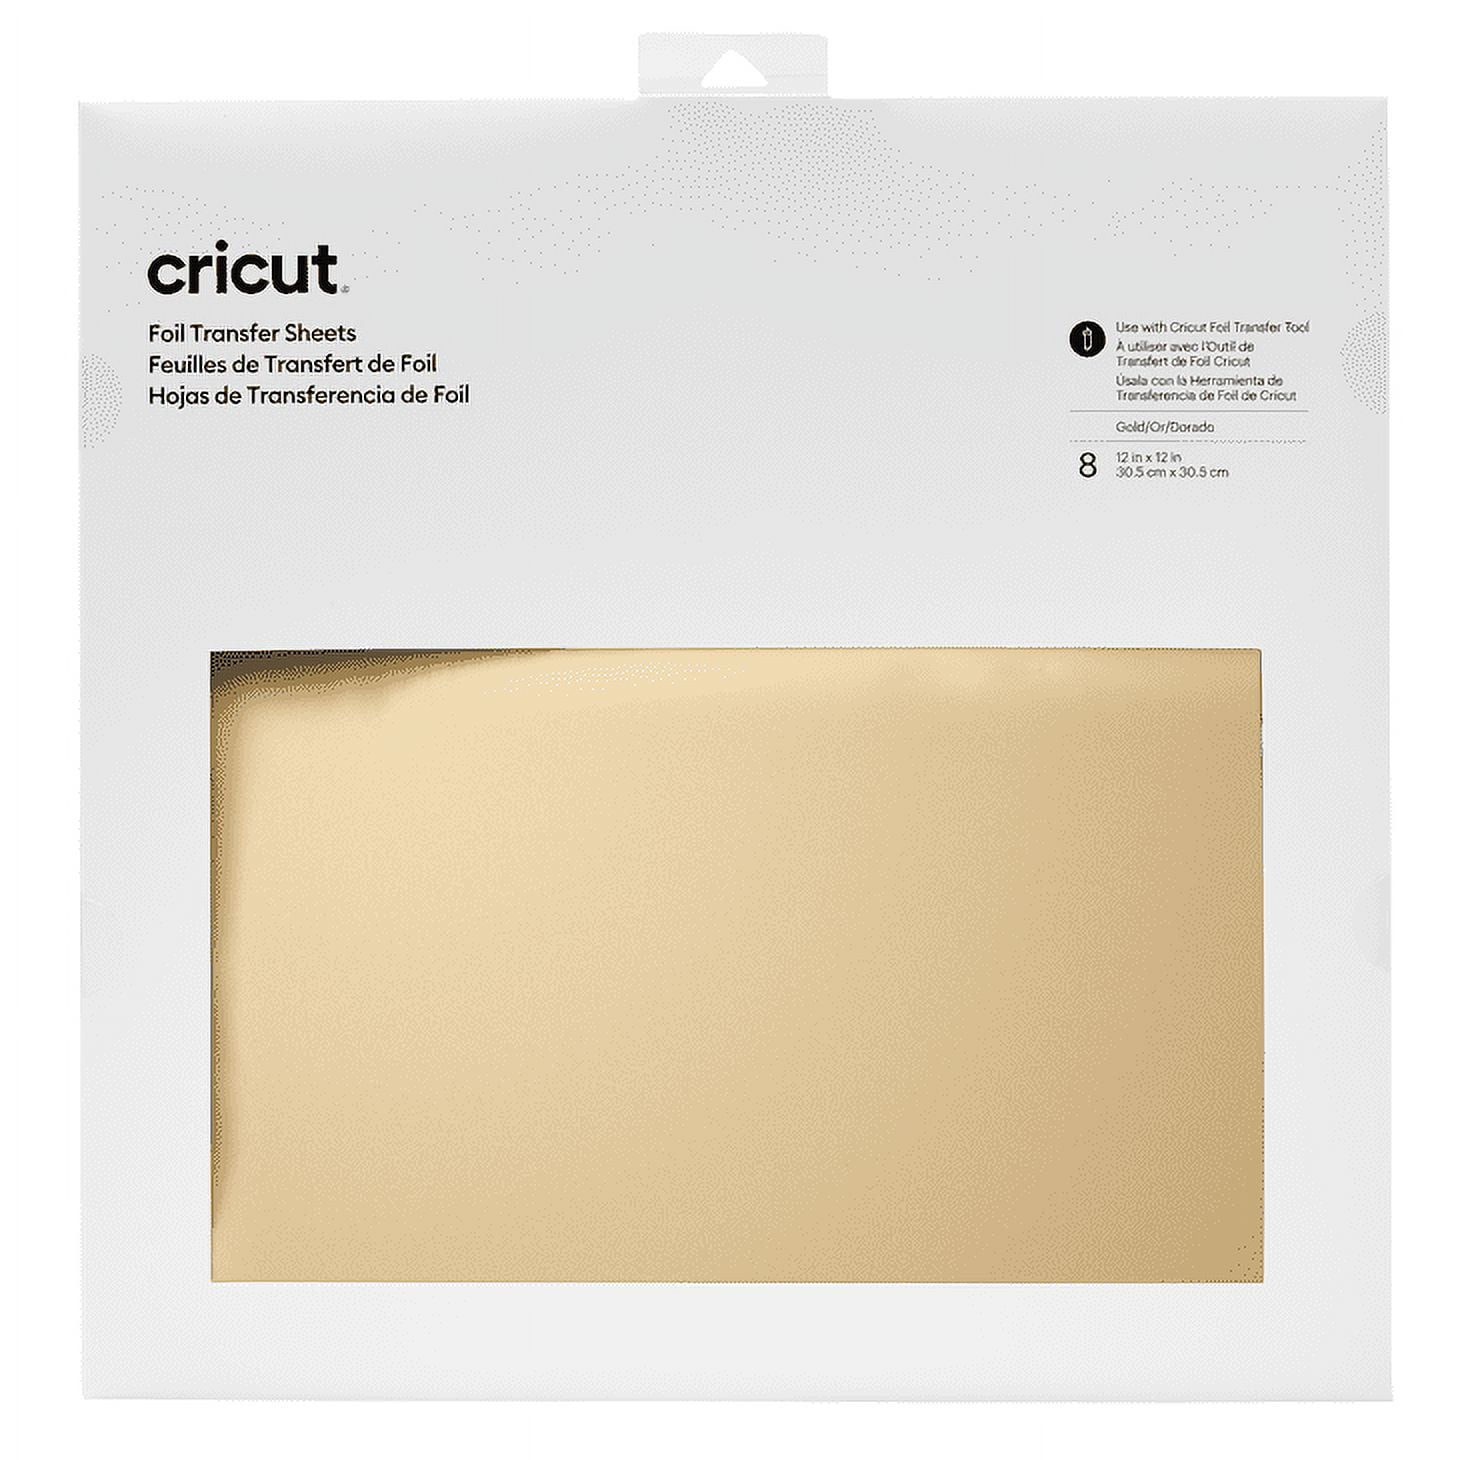 Foil Transfer Sheets Gold, Cricut 10.1 x 15.2 cm (24 sheets)